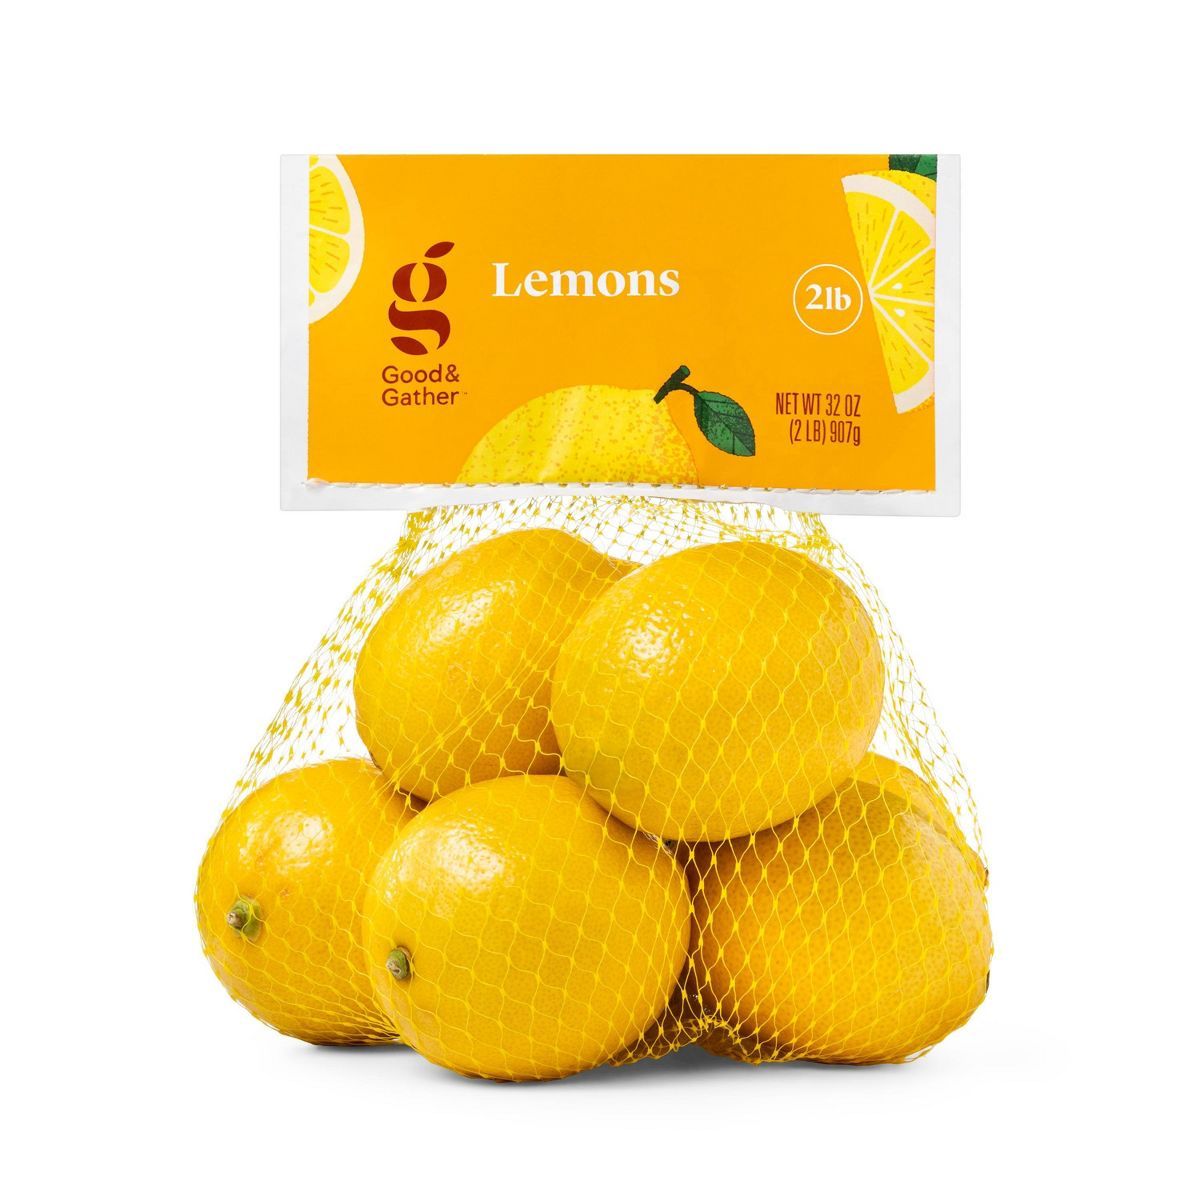 Lemons - 2lb Bag - Good & Gather™ | Target